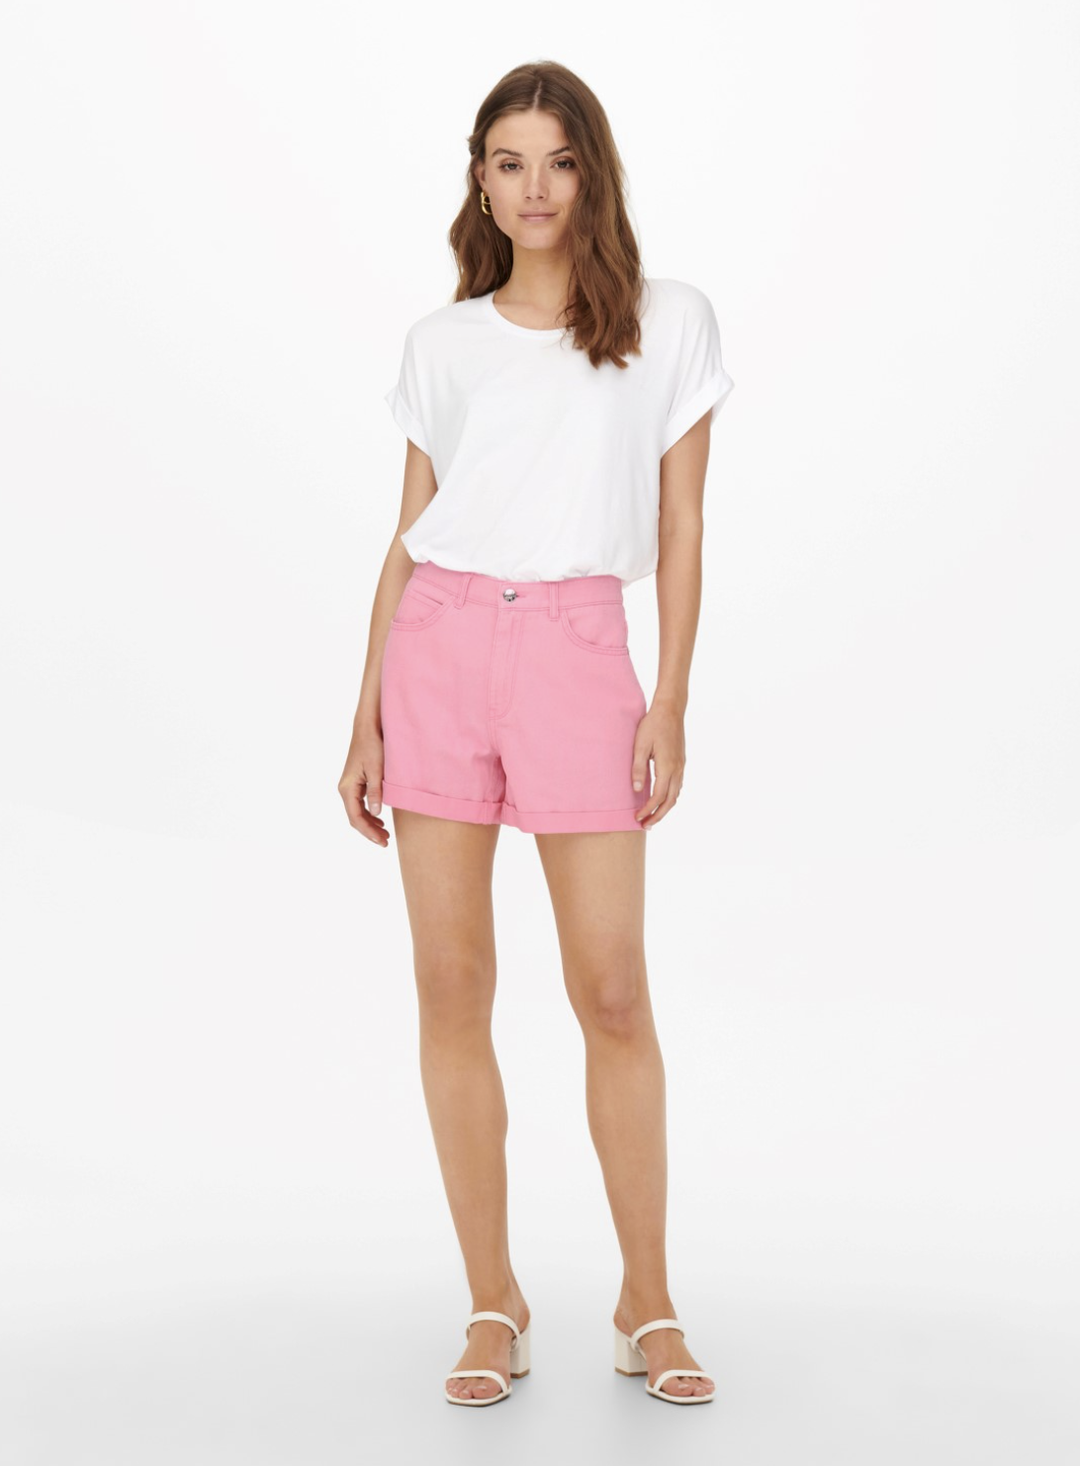 Vega Pink Shorts SALE